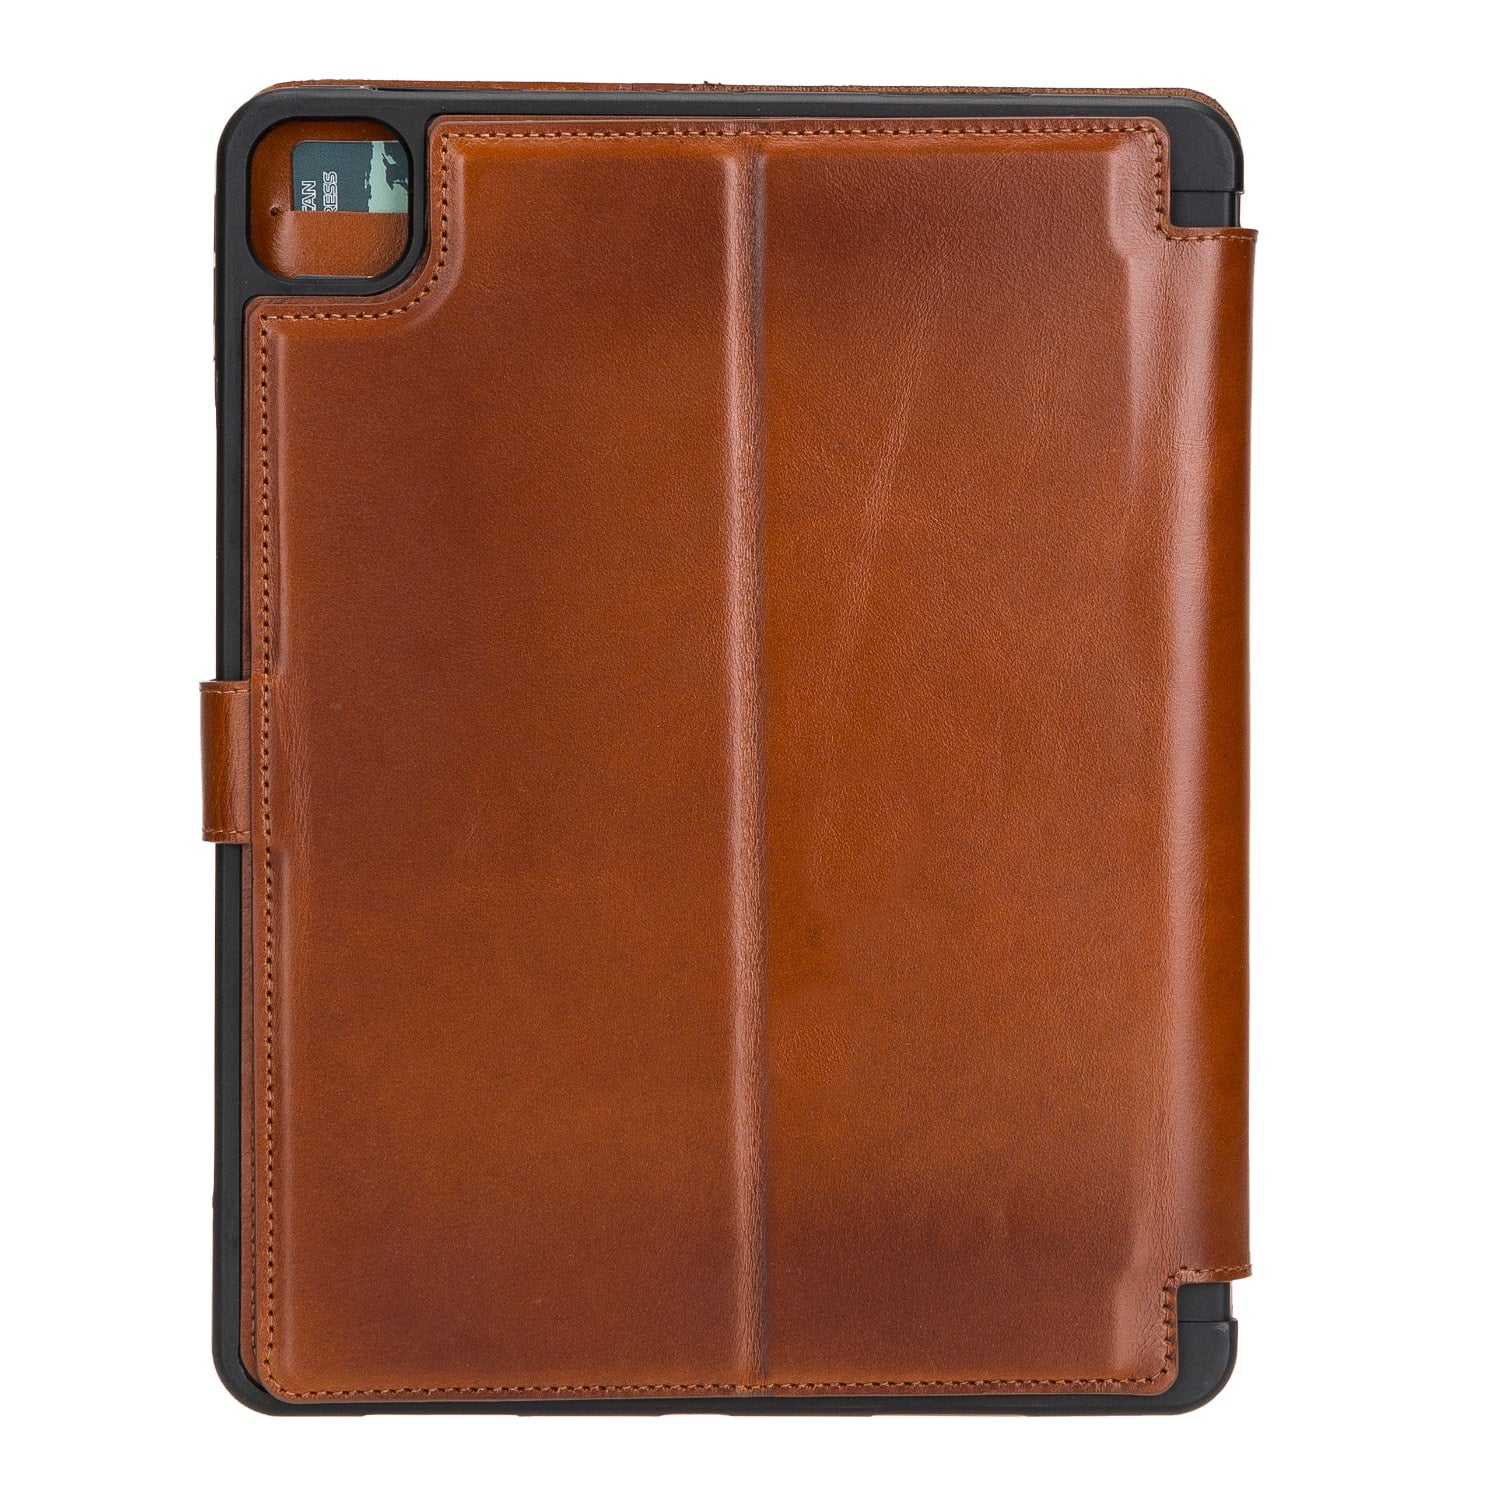 Brown Leather iPad Pro 11 Inc Smart Folio Case with Apple Pen Holder - Bomonti - 4